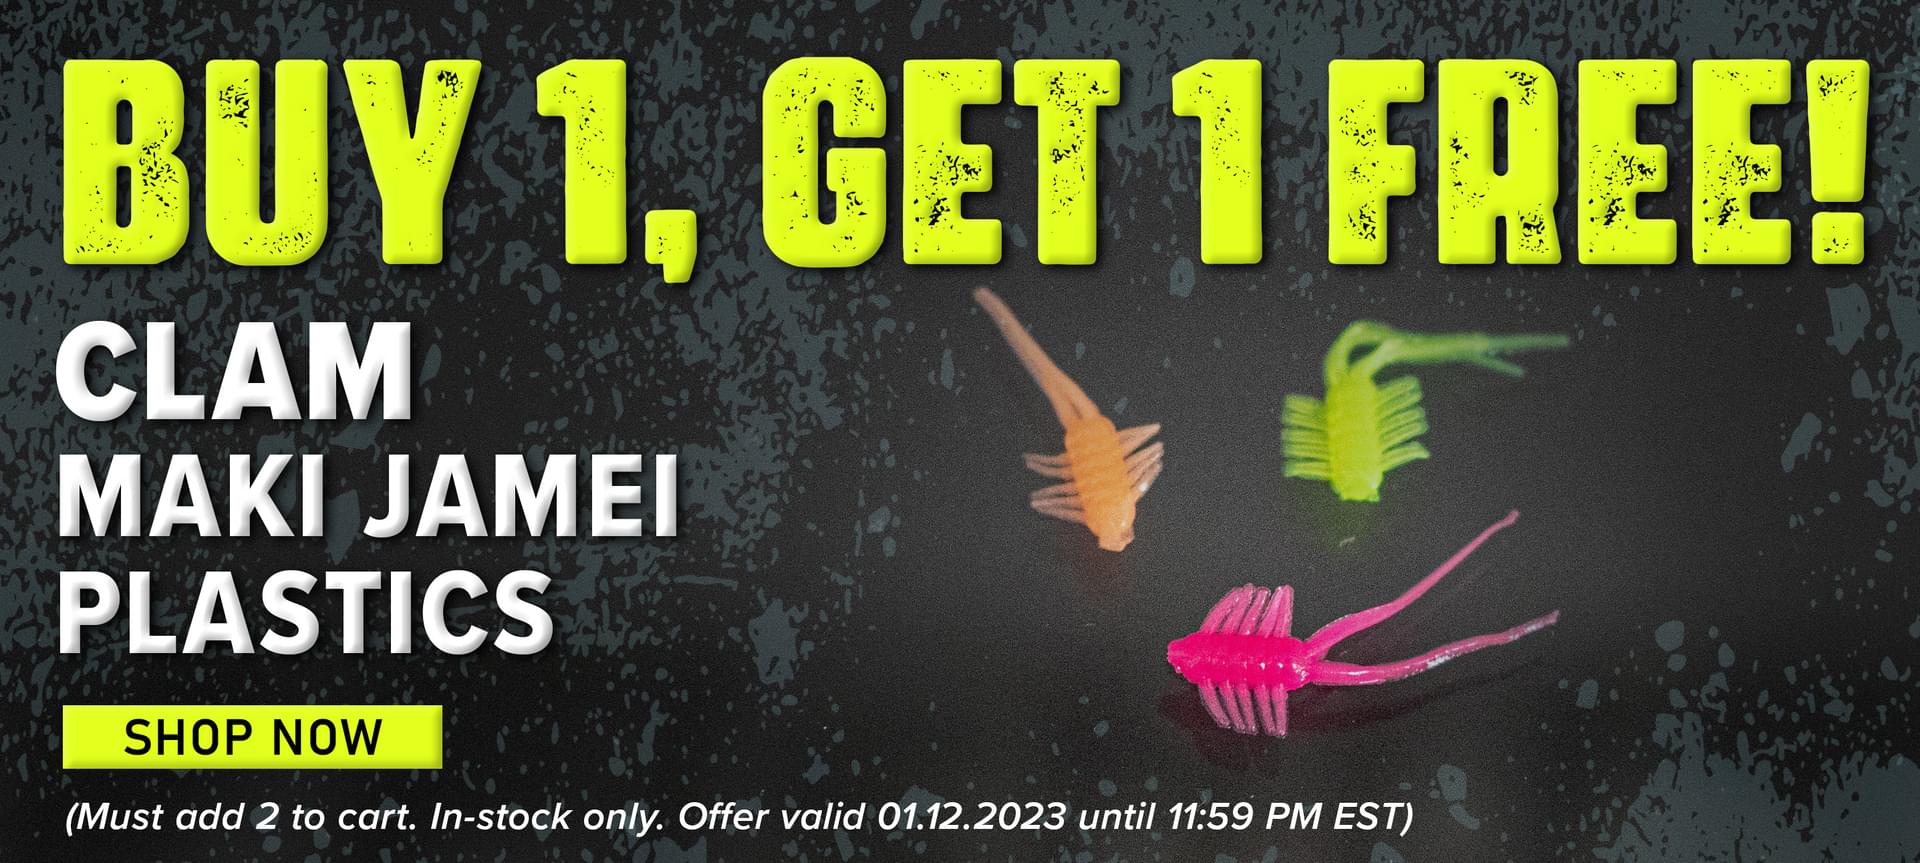 Clam Maki Jamei Plastics Buy 1, Get 1 Free Today Only! - Fish USA